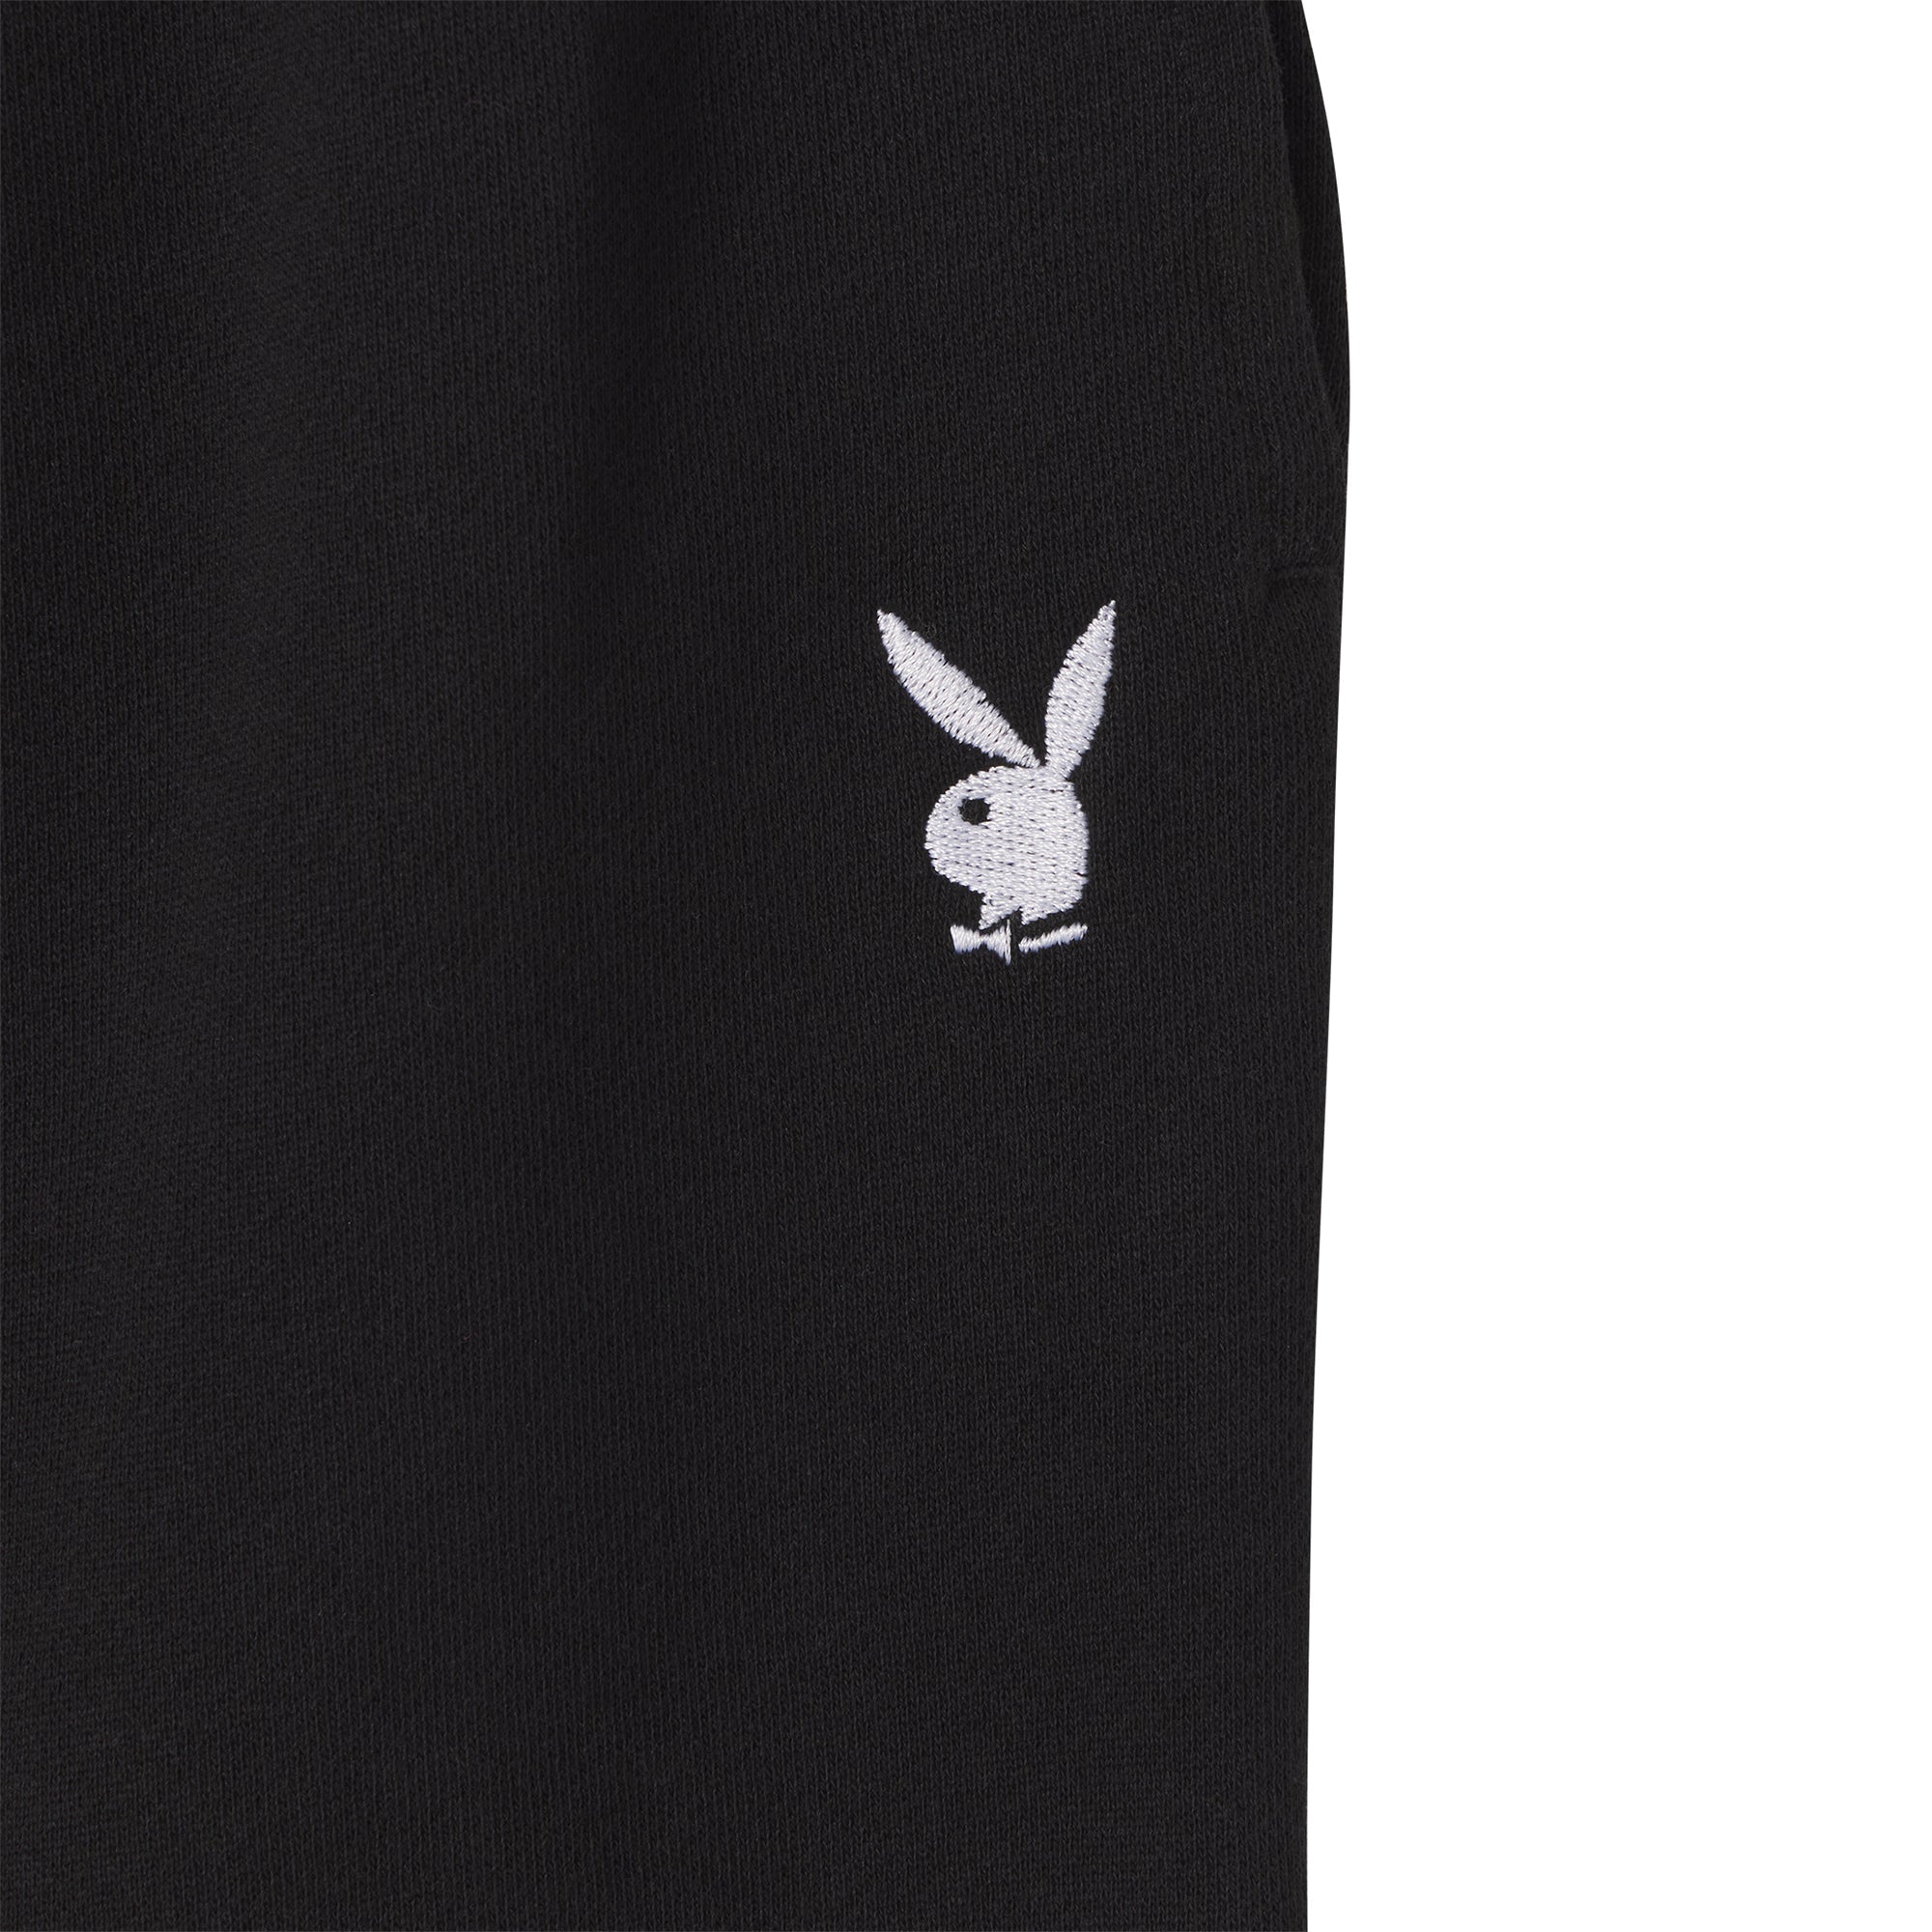 Bunny Basics Sweatpant, Black